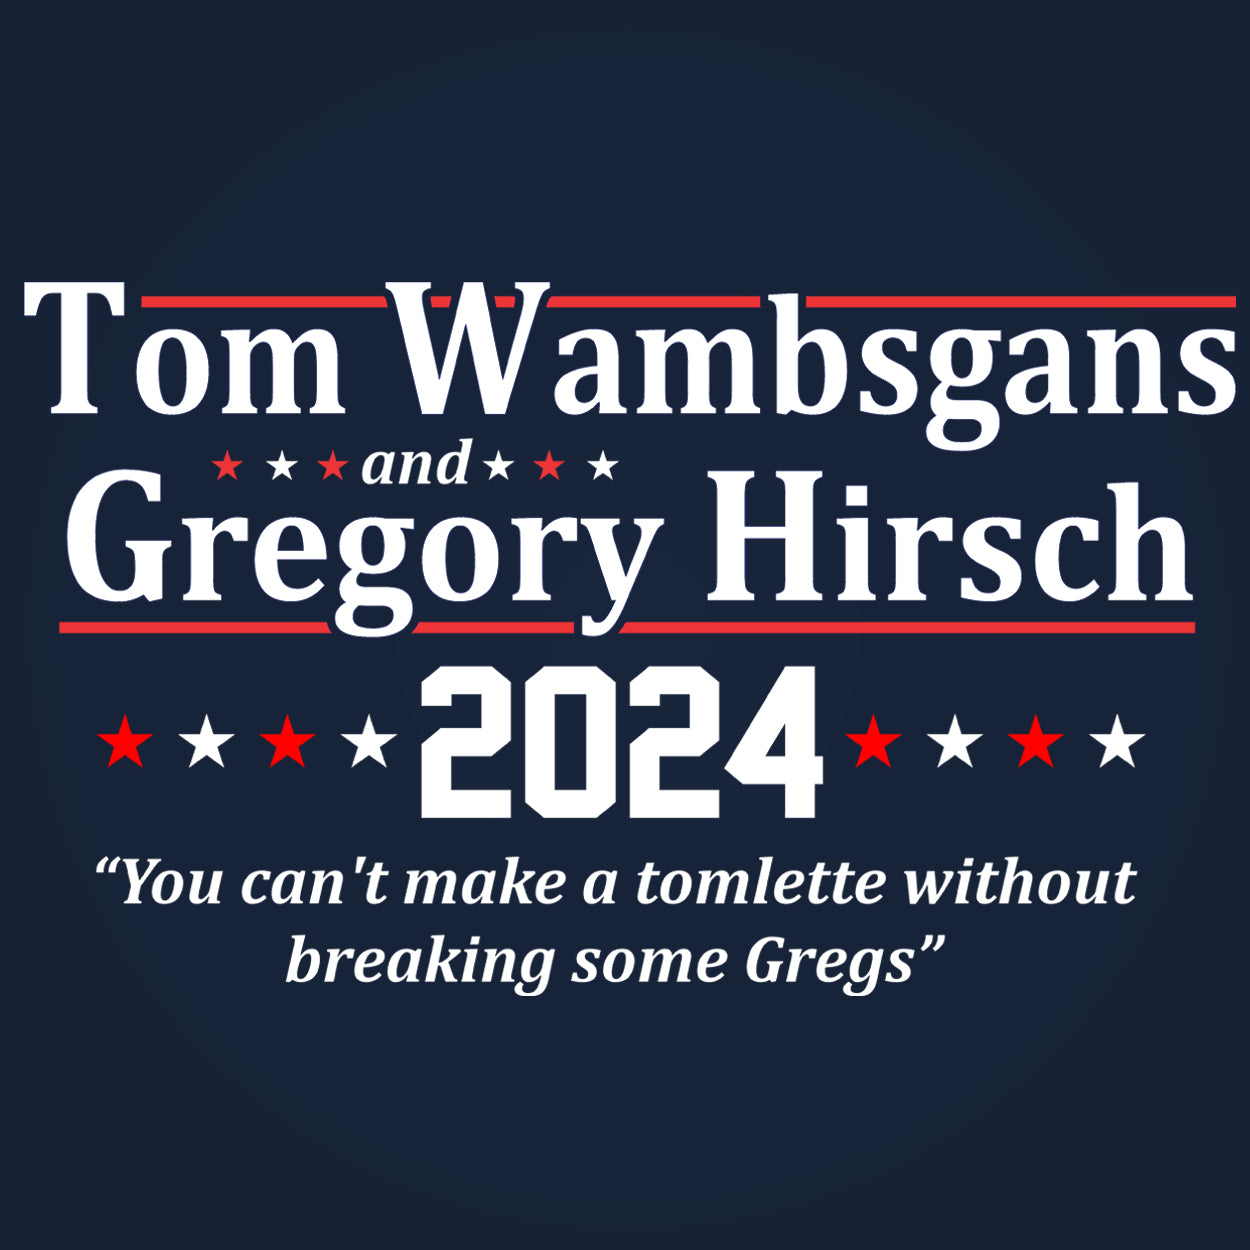 Tom And Greg 2024 Election Tshirt - Donkey Tees